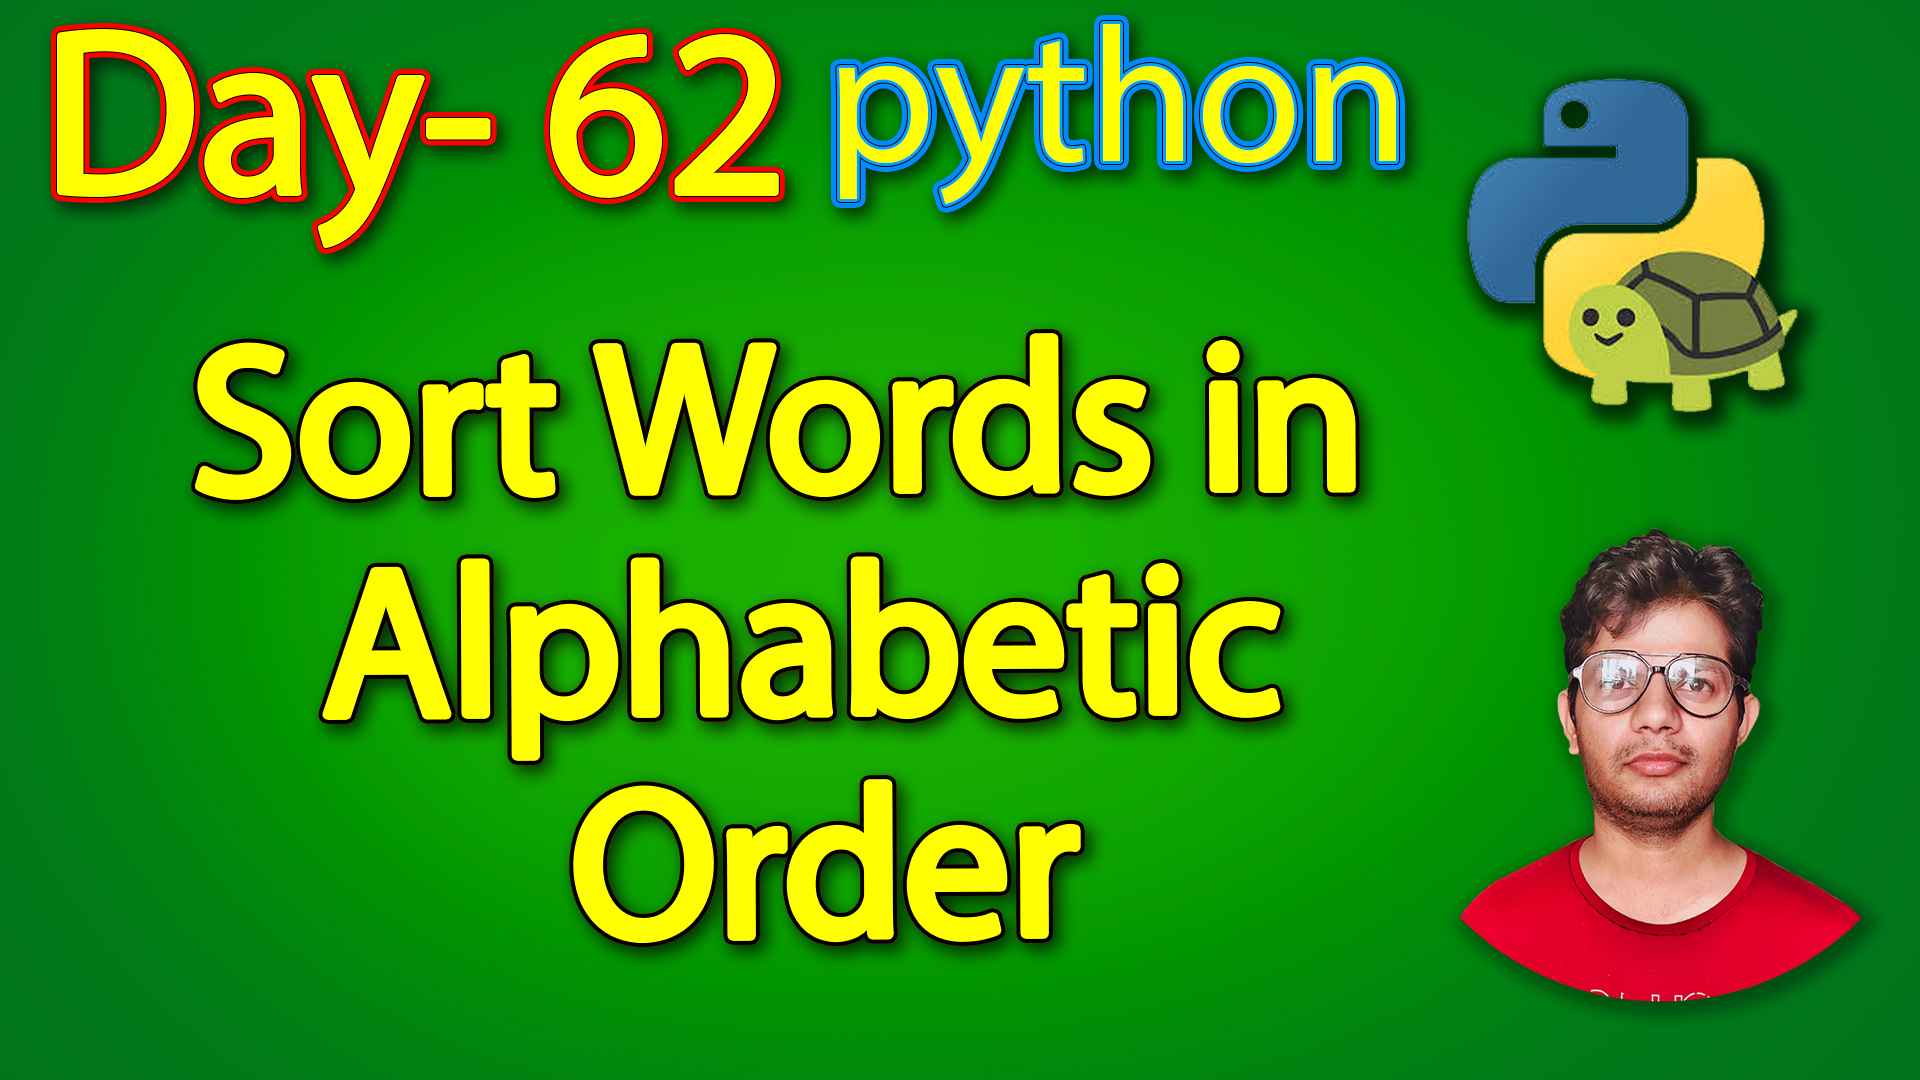 Order python. Awesome Python Turtle codes.